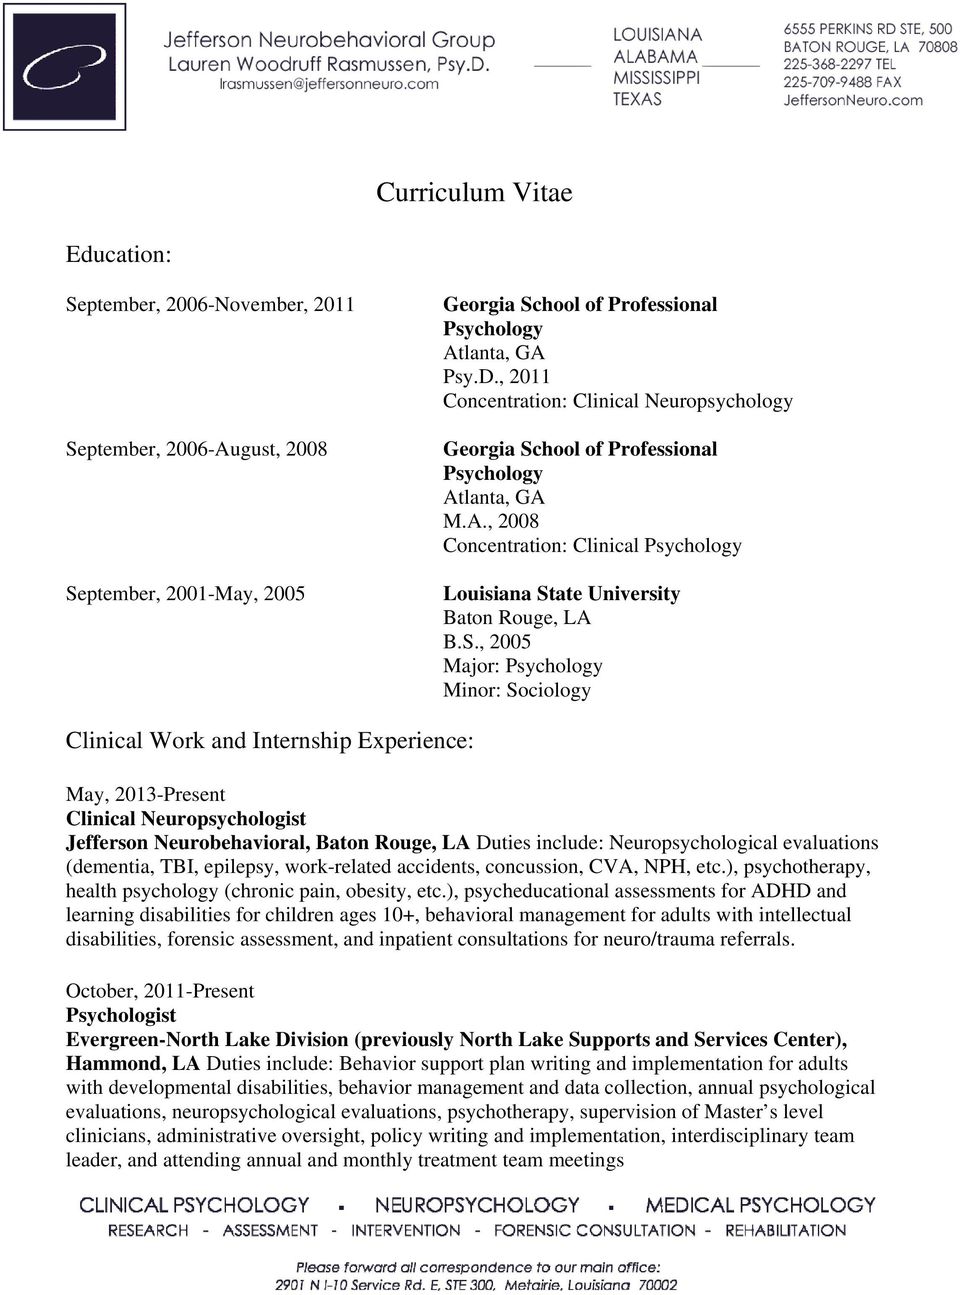 hool of Professional Psychology Atlanta, GA M.A., 2008 Concentration: Clinical Psychology Louisiana St